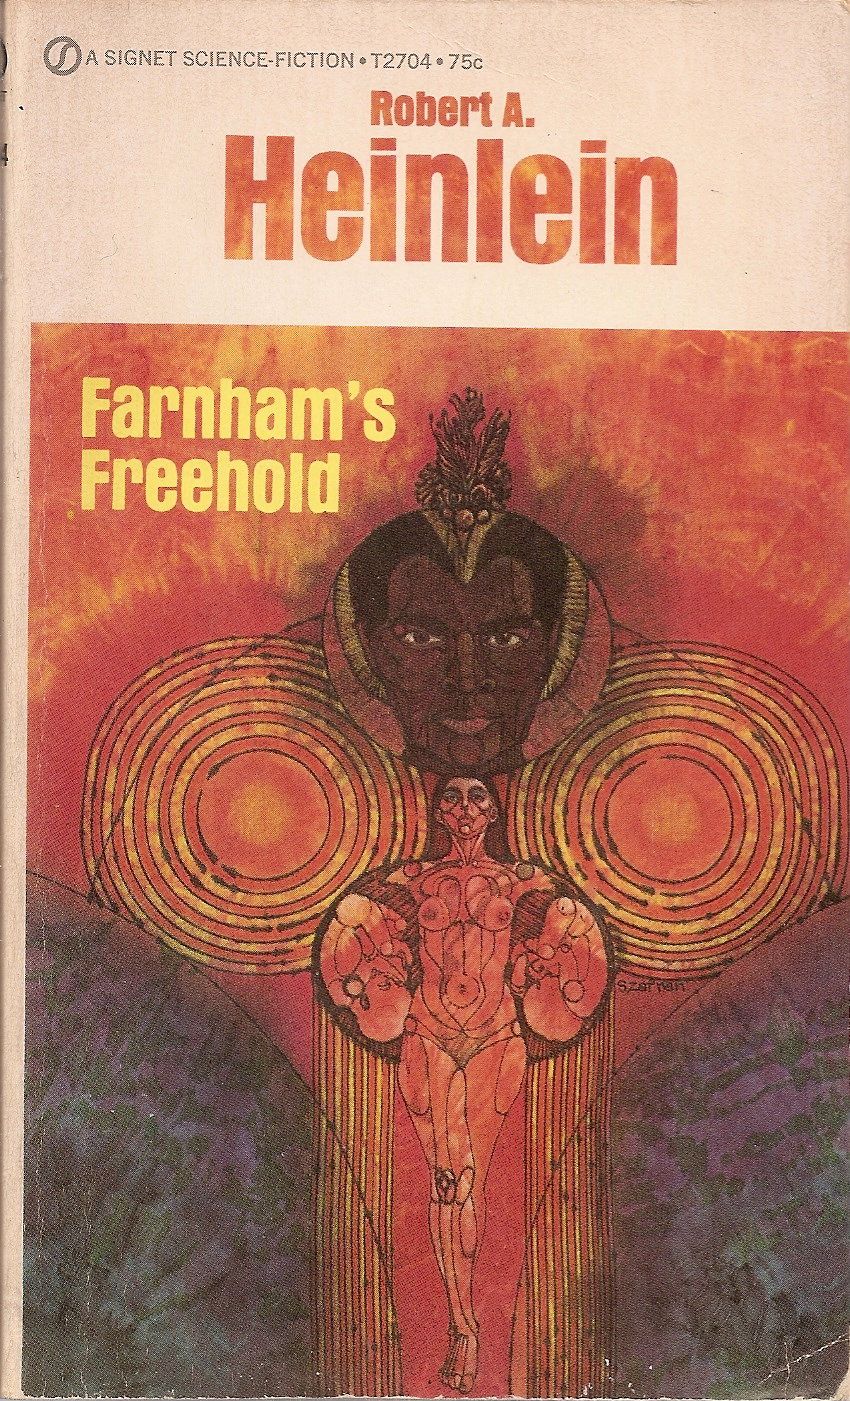 Robert A. Heinlein's Farnham's Freehold book